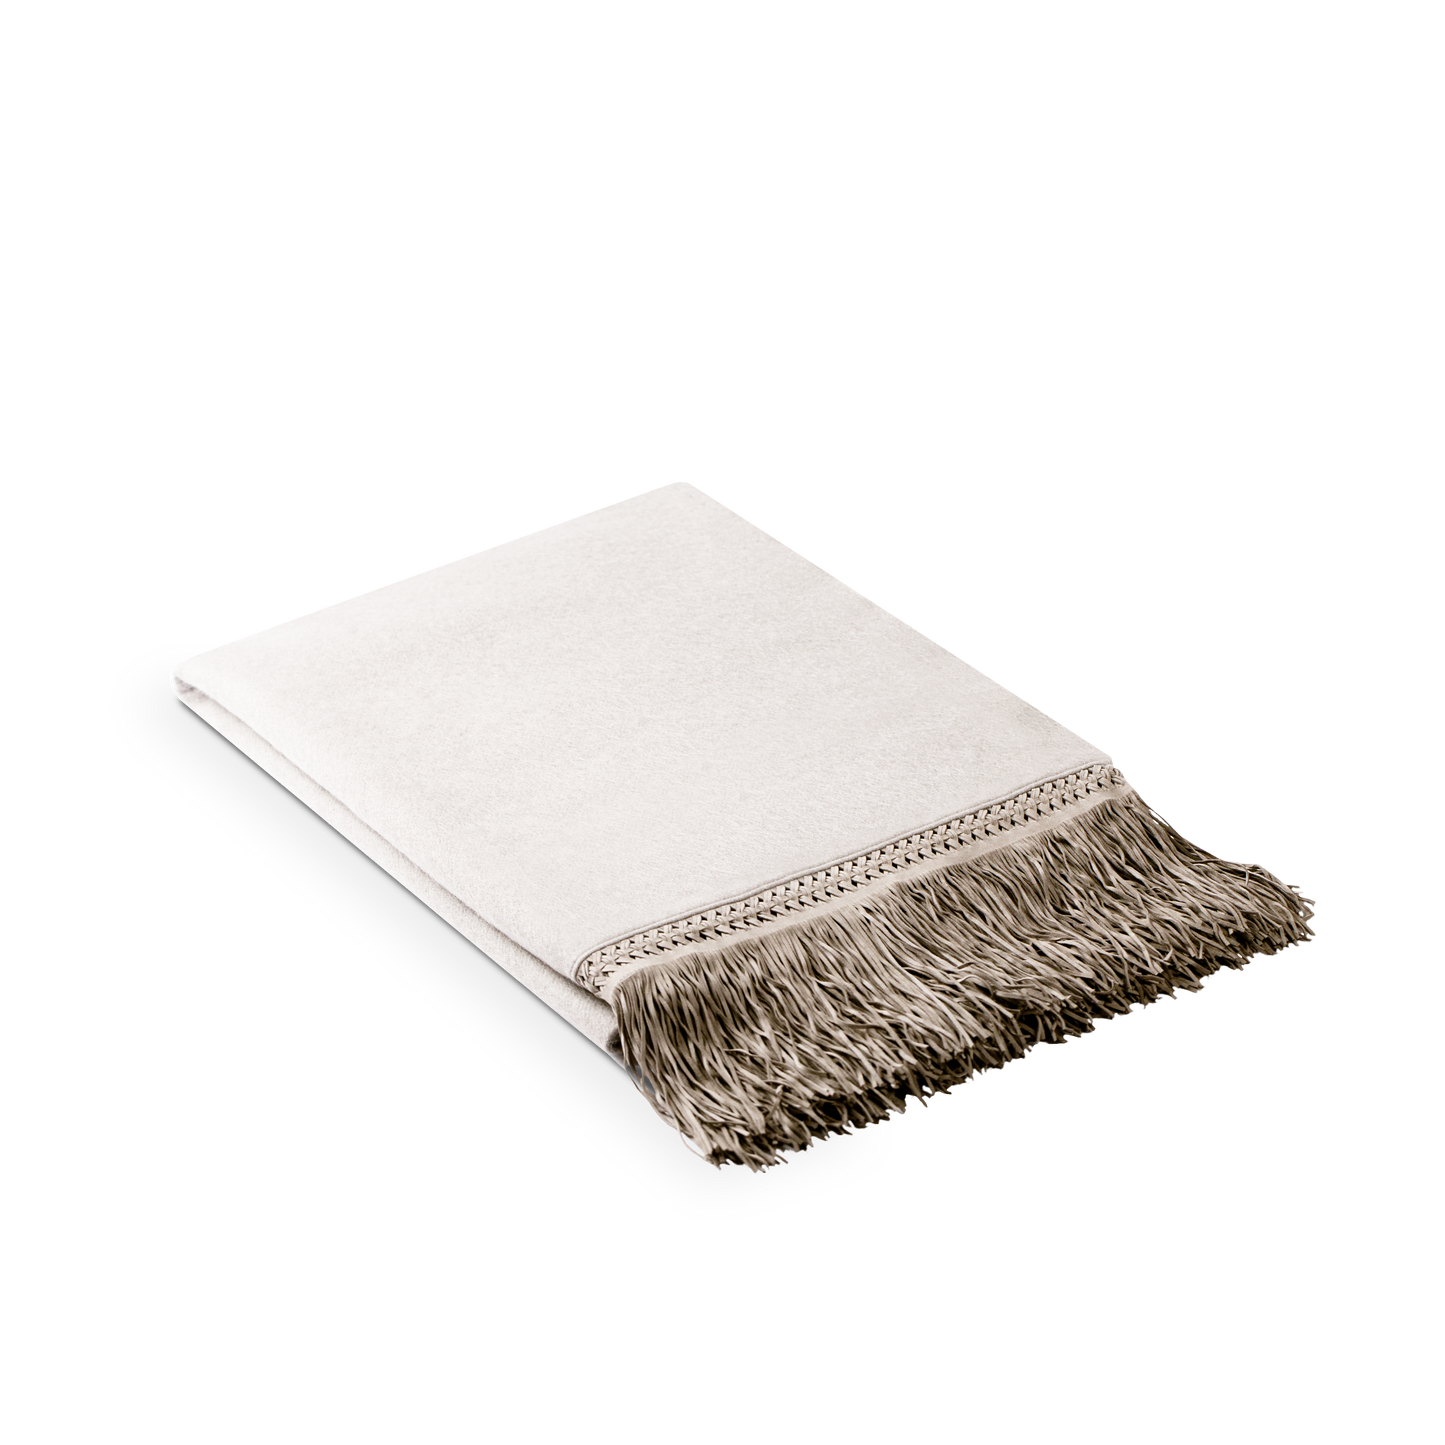 Handmade blanket, blend of cashmere and merino wool, folded 